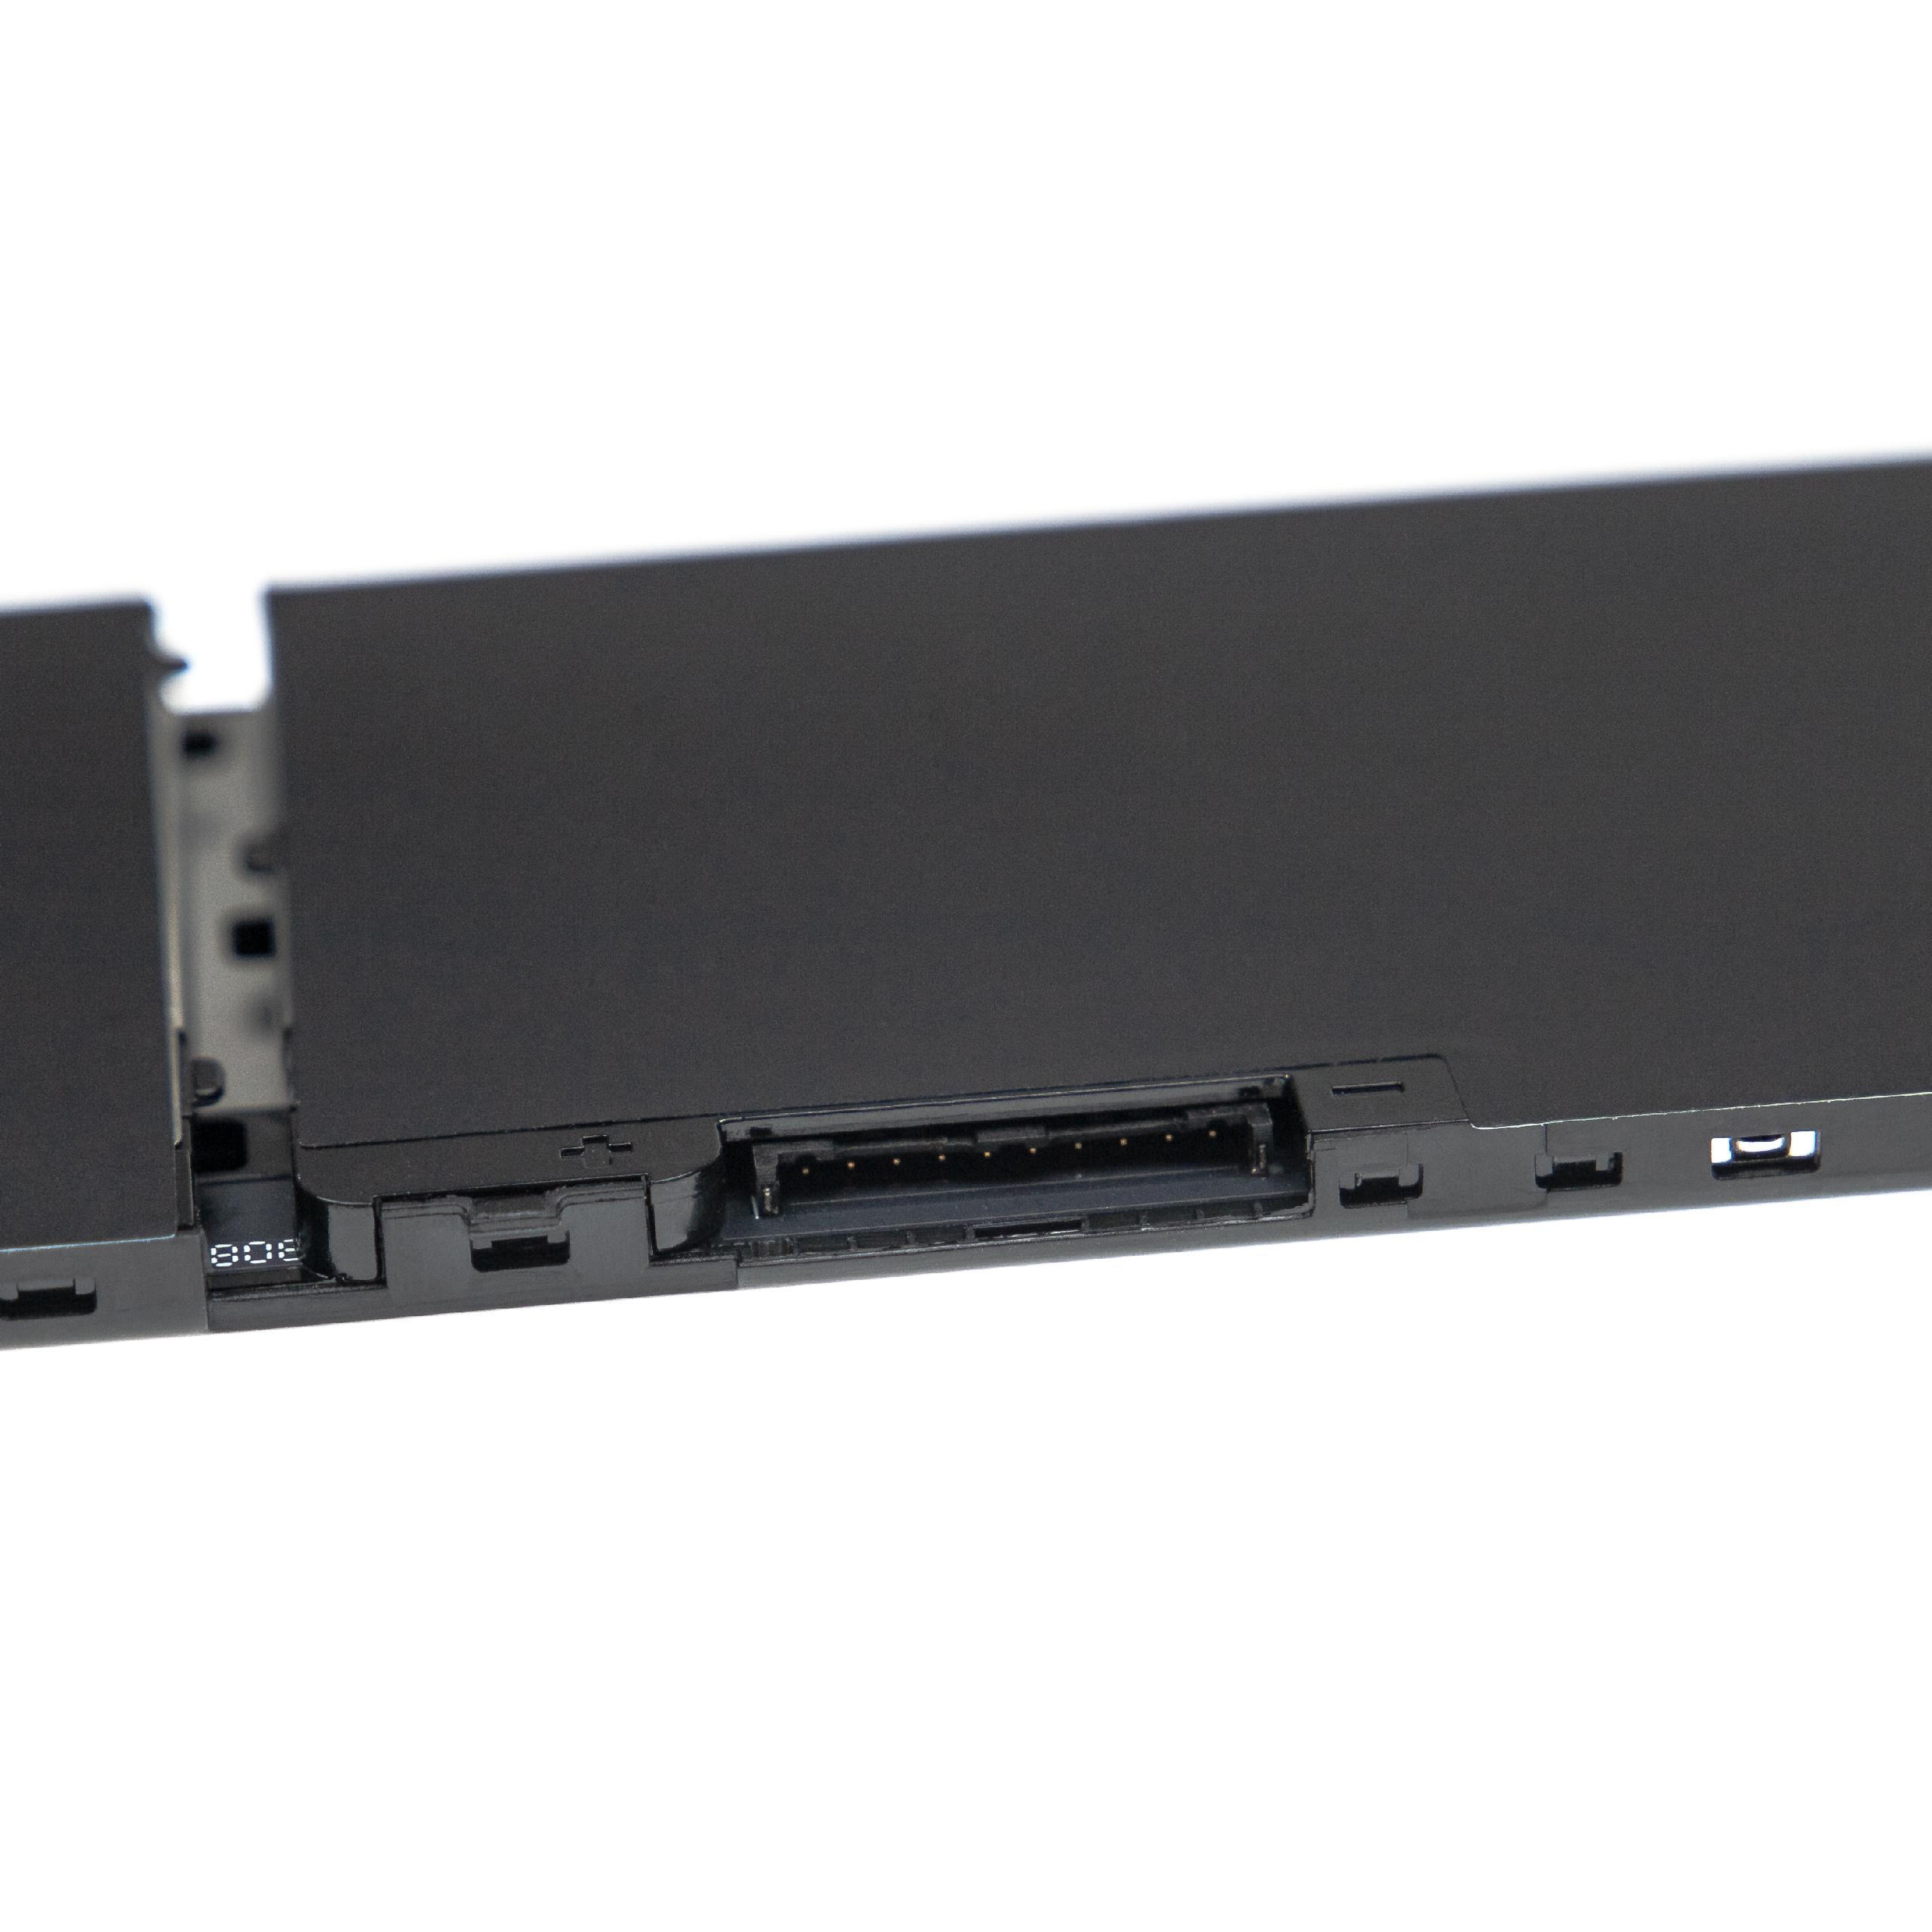 Akumulator do laptopa zamiennik Dell J0VNR, PKWVM, G5FJ8, PWKVM, C903V, CR72X, 68ND3 - 7850 mAh 11,4 V Li-Ion